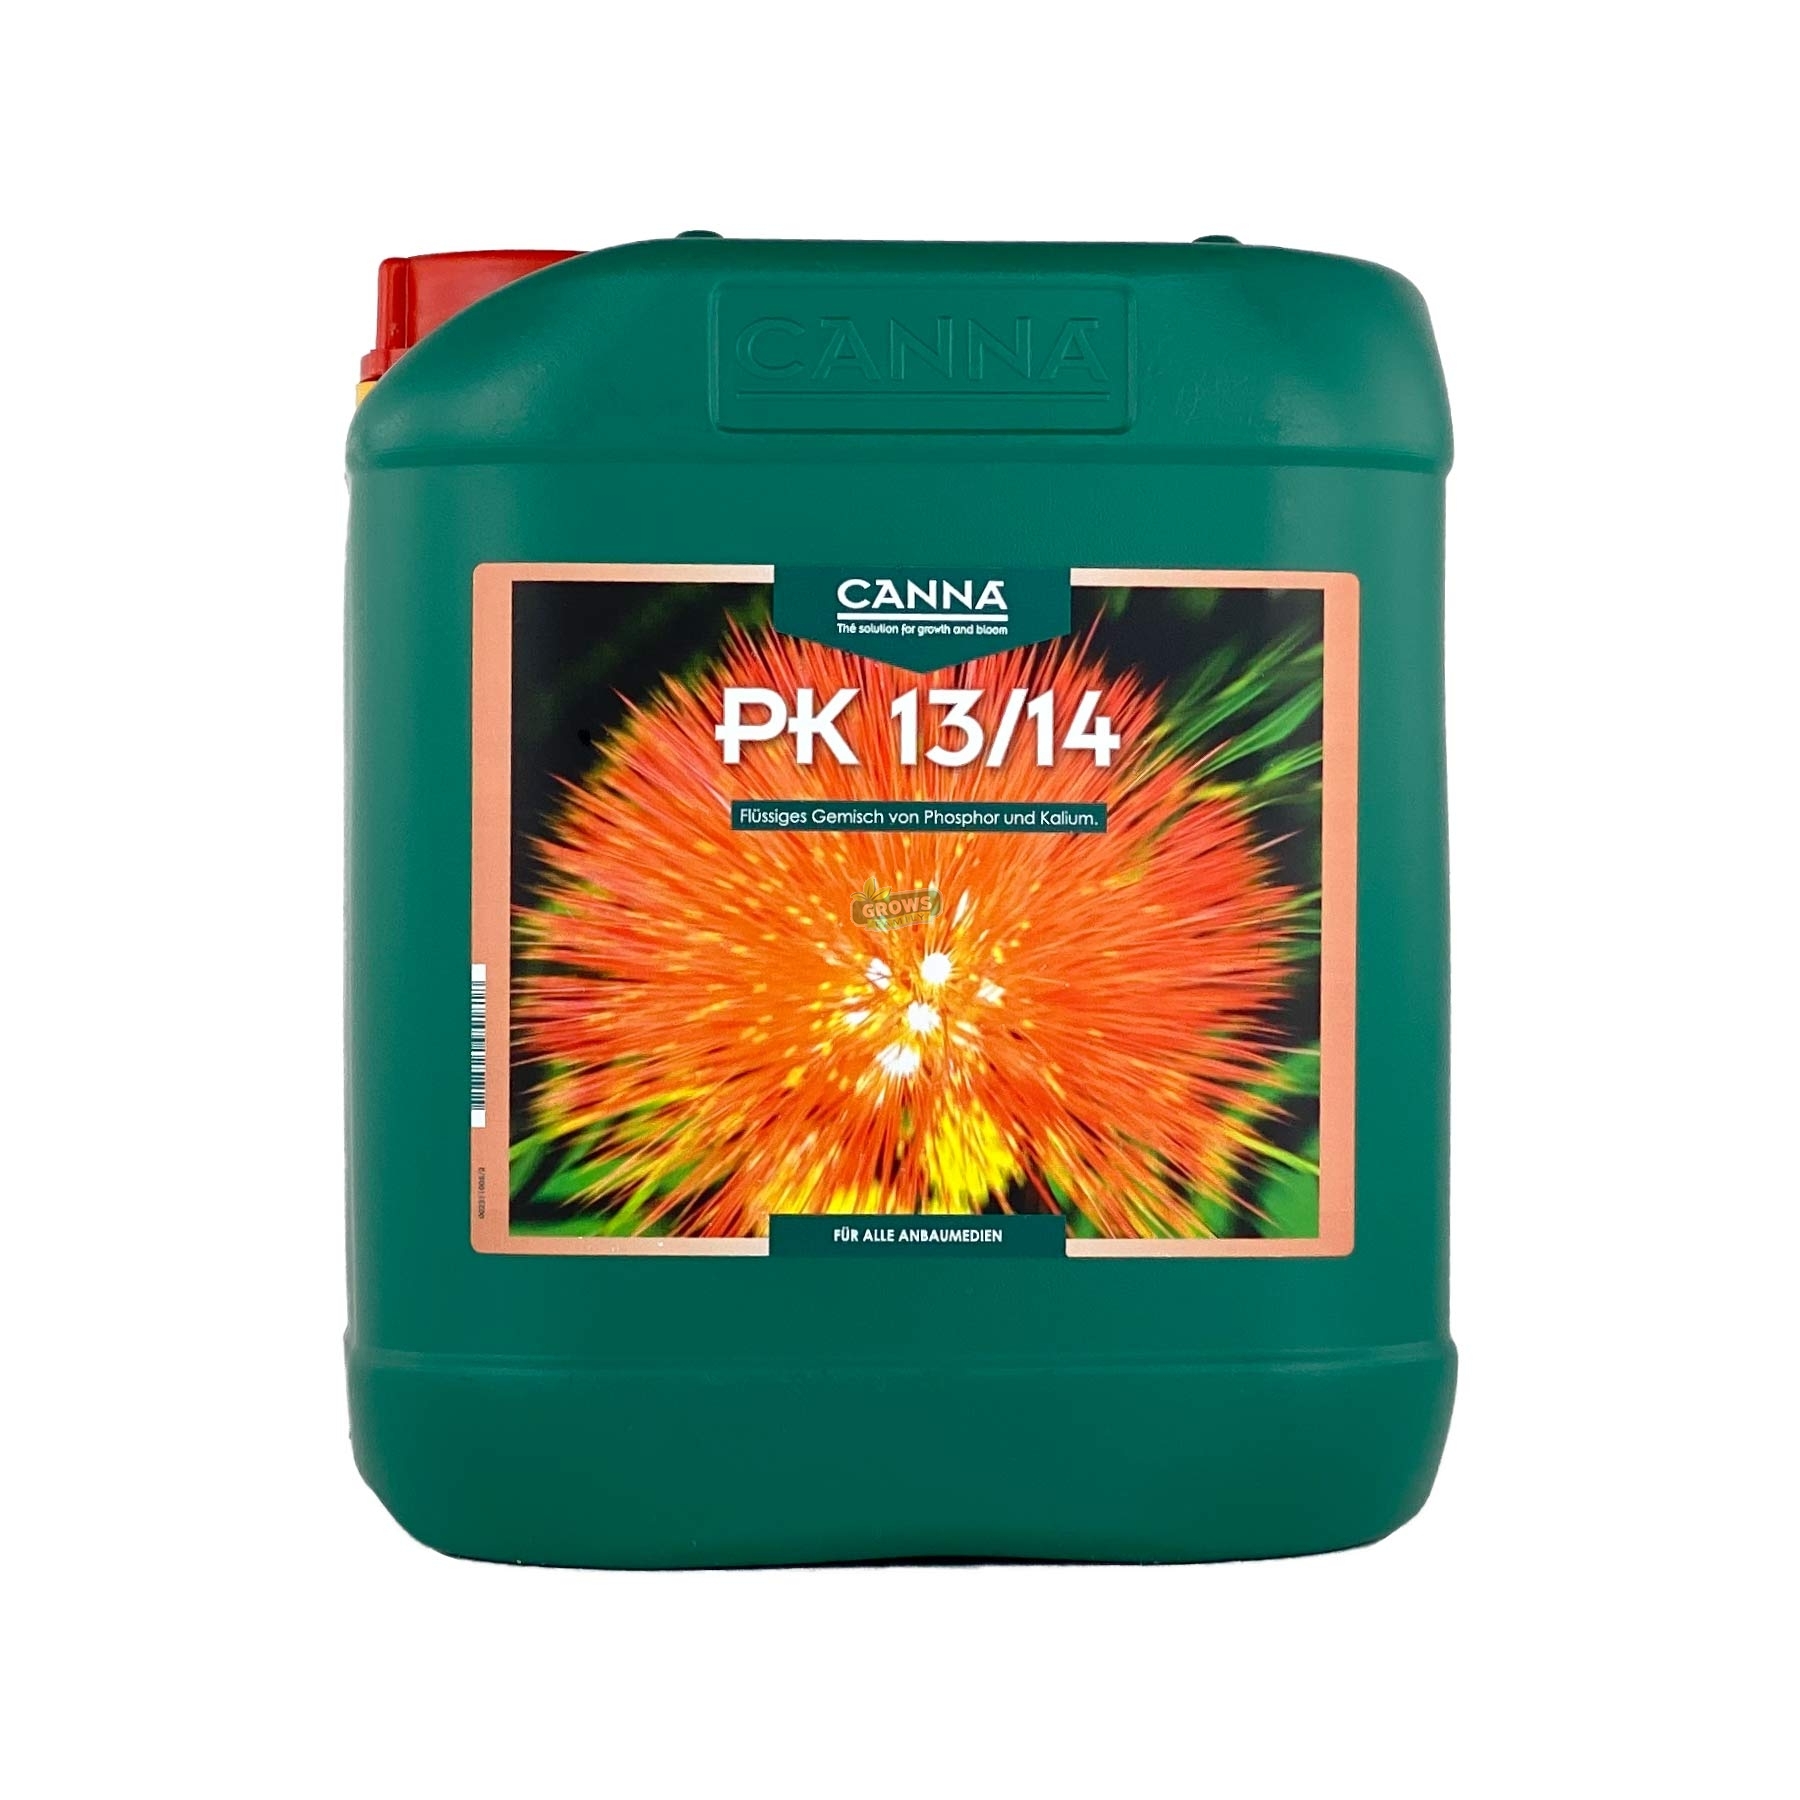 Canna PK 13/14 10 litre